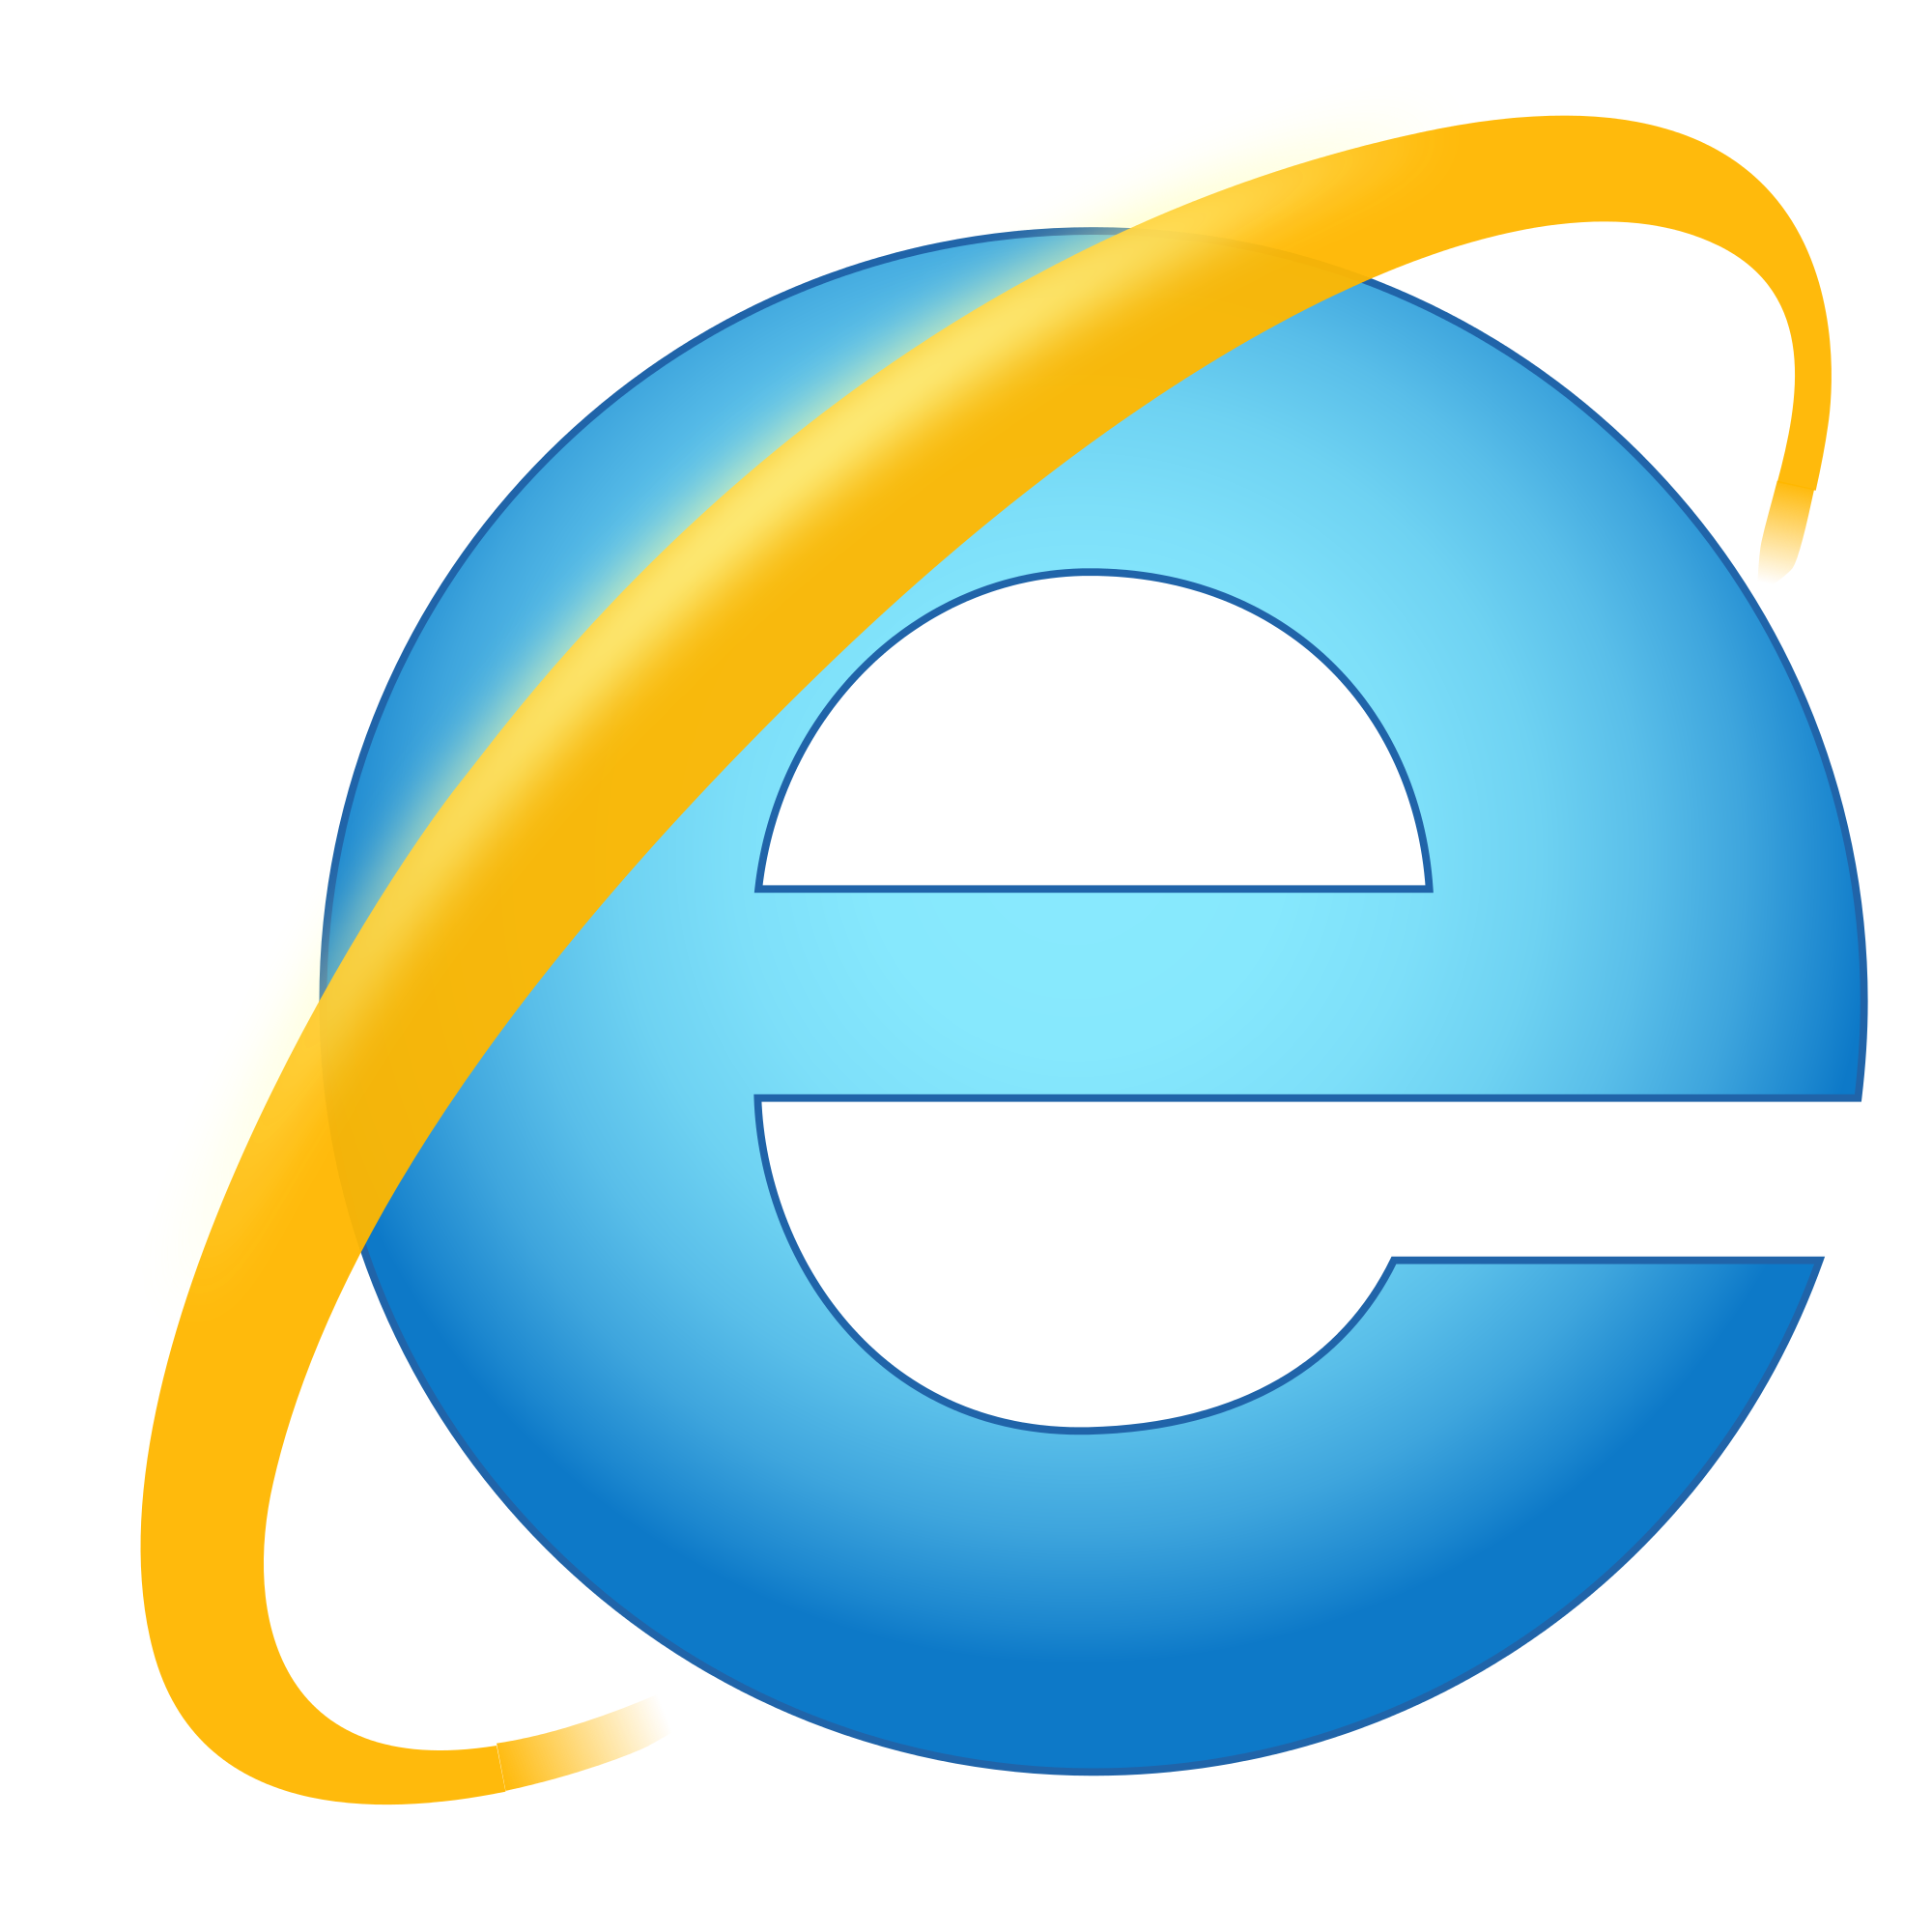 Logo internetexplo.png